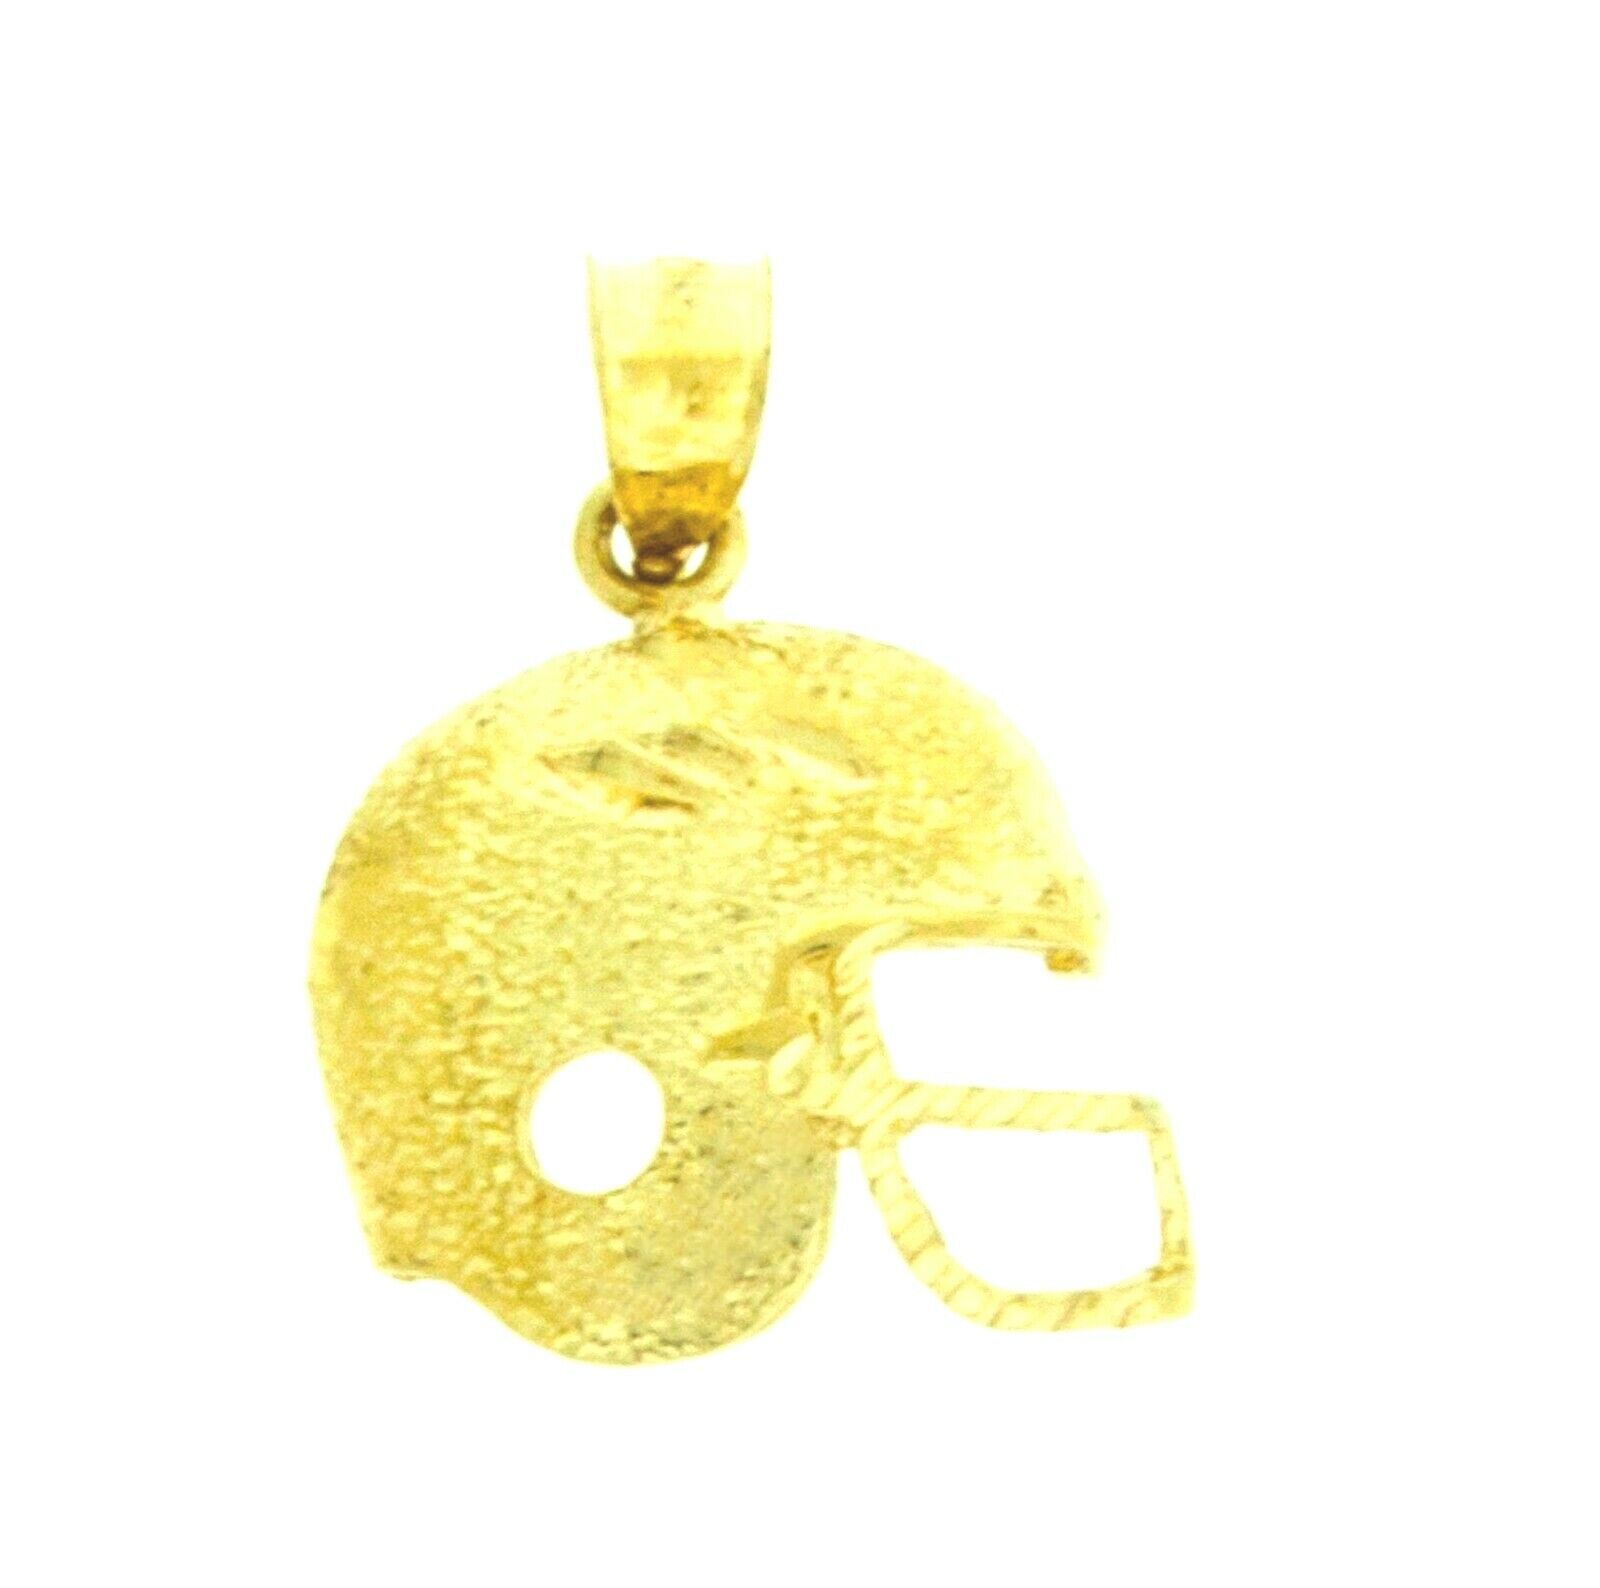 Football Helmet 14k Solid Yellow Gold New Pendant Necklace Charm .84 Inches Long Świetne oferty, tanie